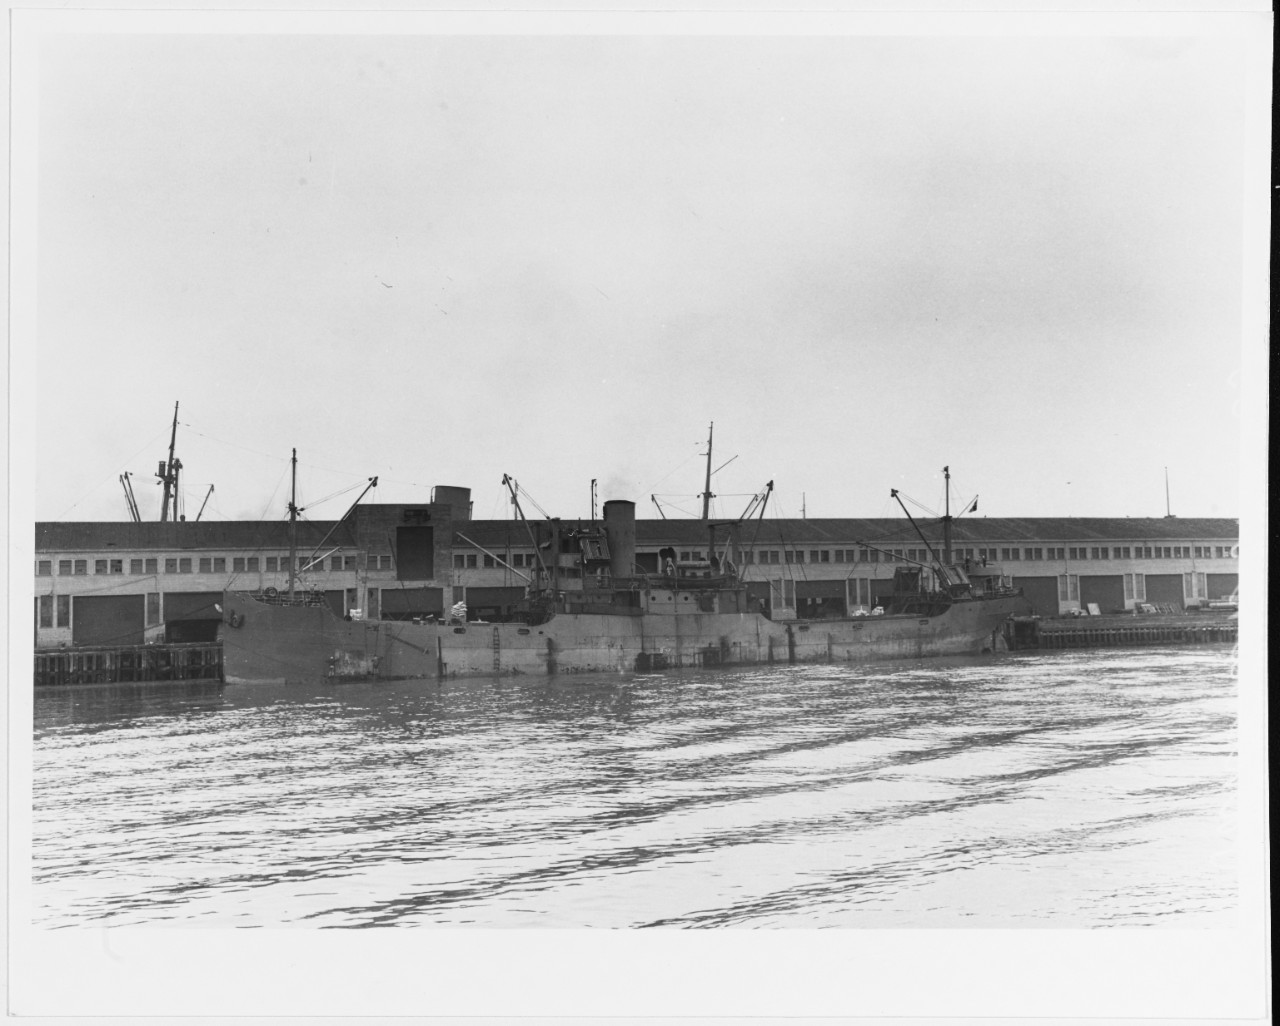 S.S. INTREPIDO (Panamanian Merchant Cargo Ship, 1920-1950)